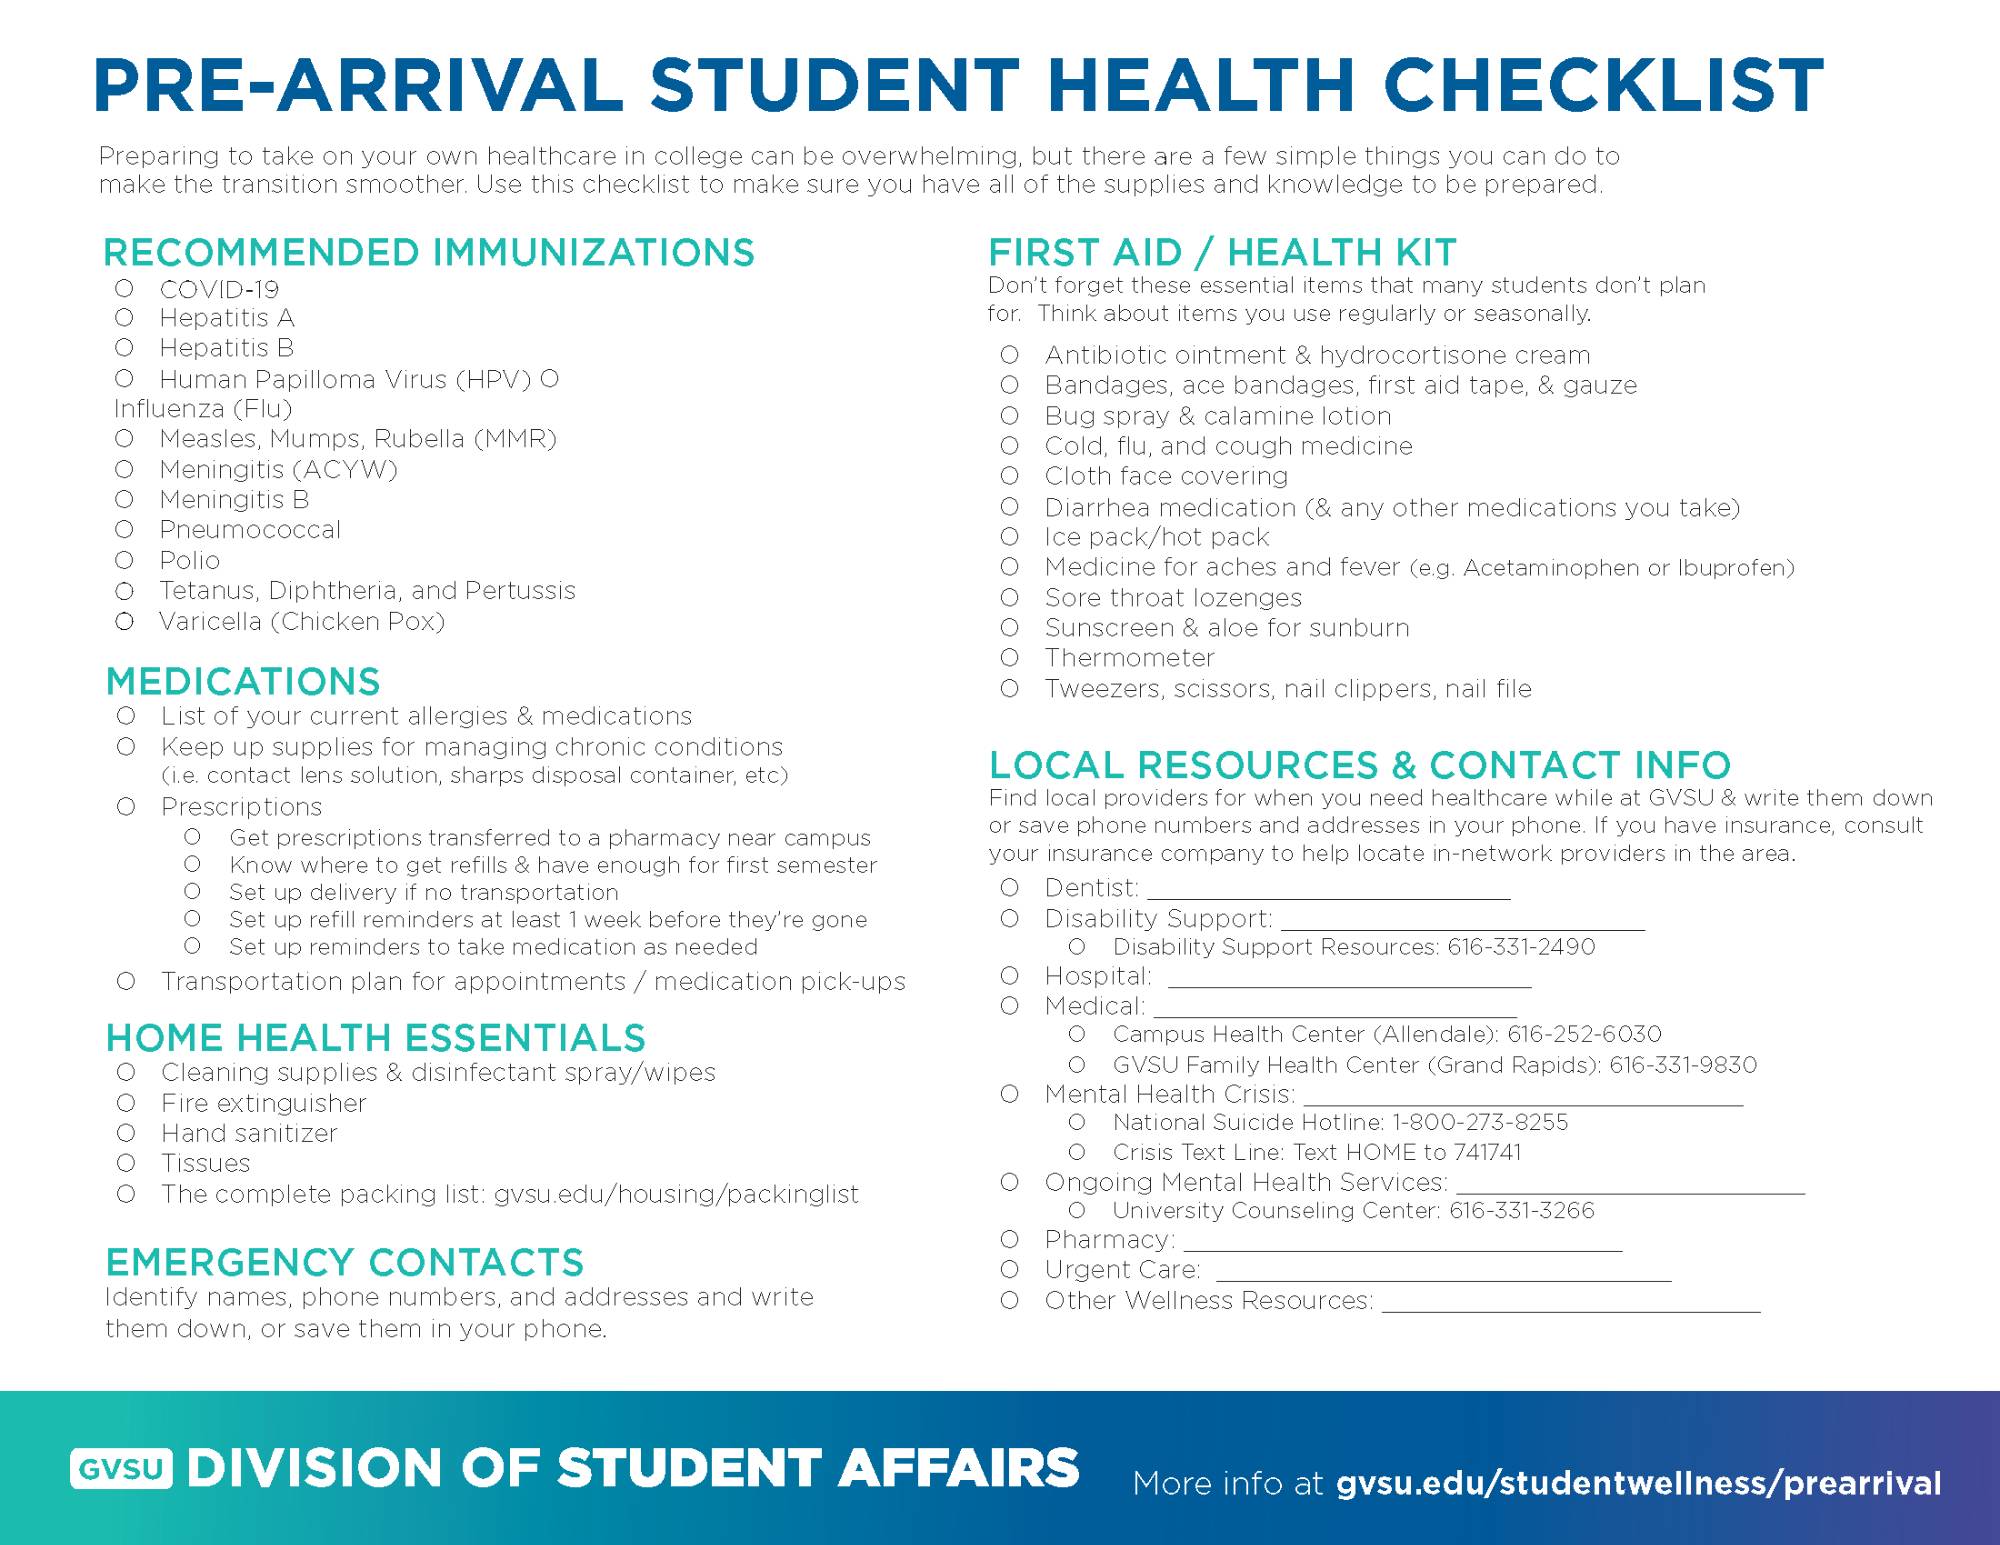 https://www.gvsu.edu/cms4/asset/44129FFA-CB4F-3E81-BB1AA77A972EE390/pre-arrival_student_health_checklist_s21__accessible_12023_page_1(2)[1683737825].jpg